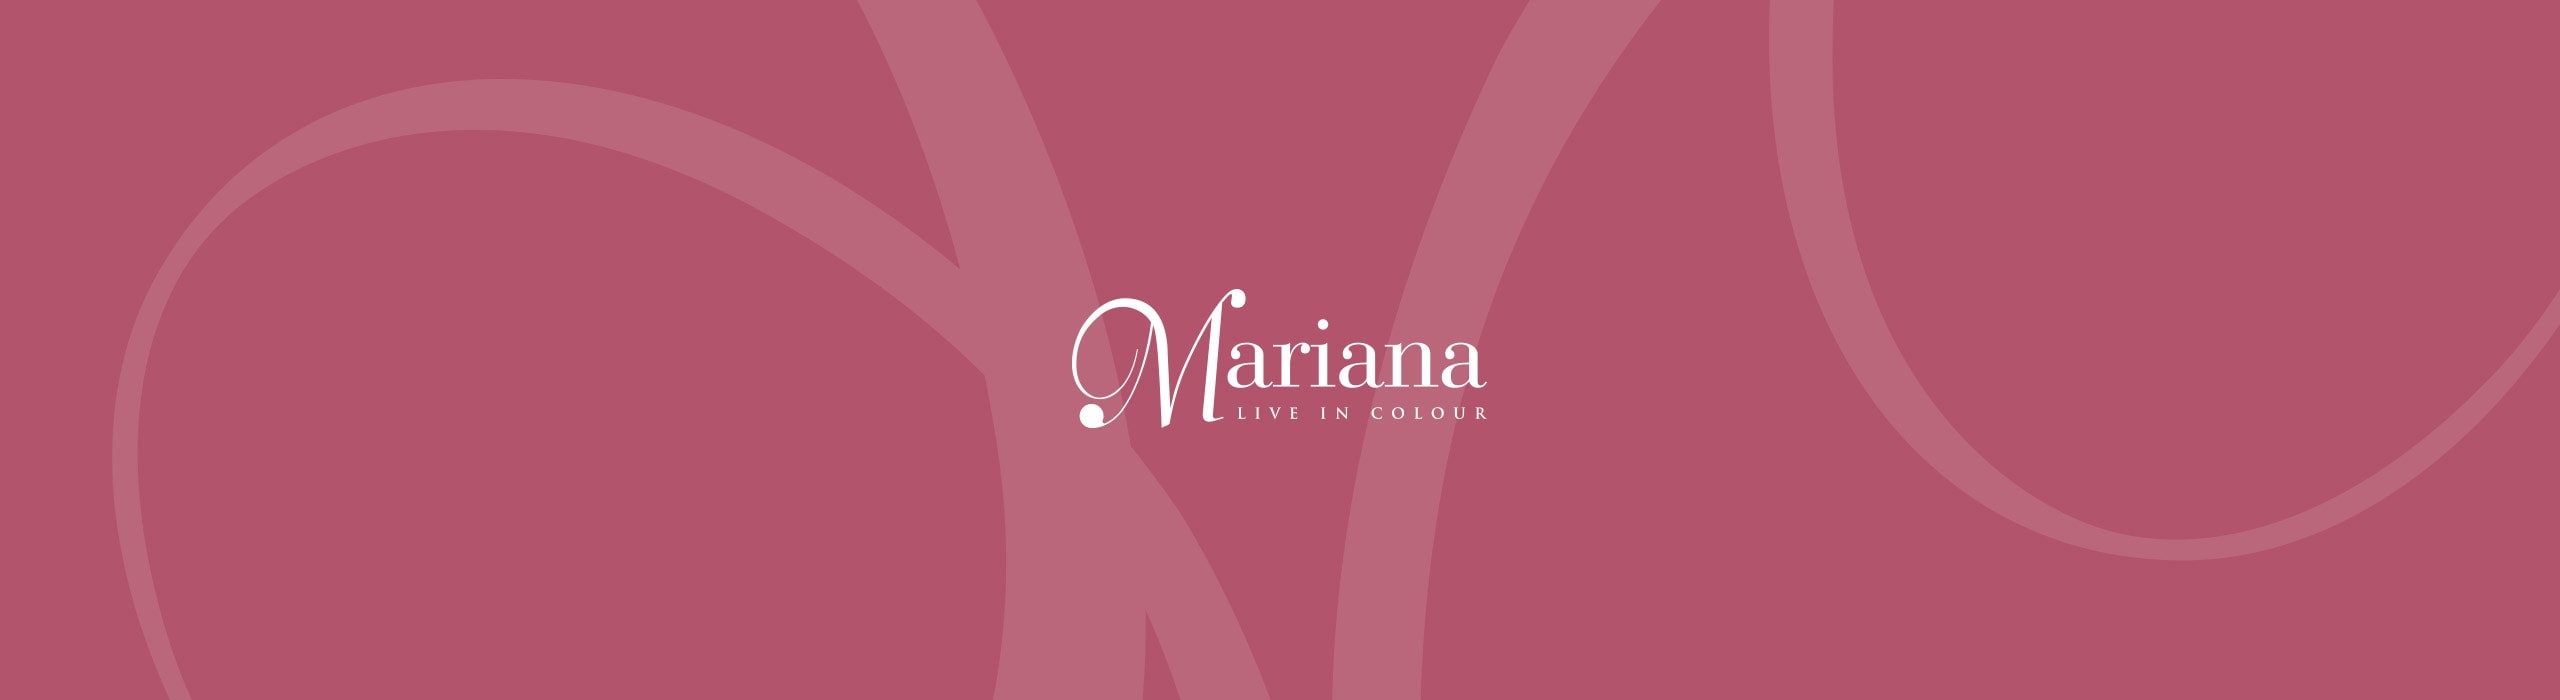 Mariana - natie-mariana-logo - Natie Branding Agency